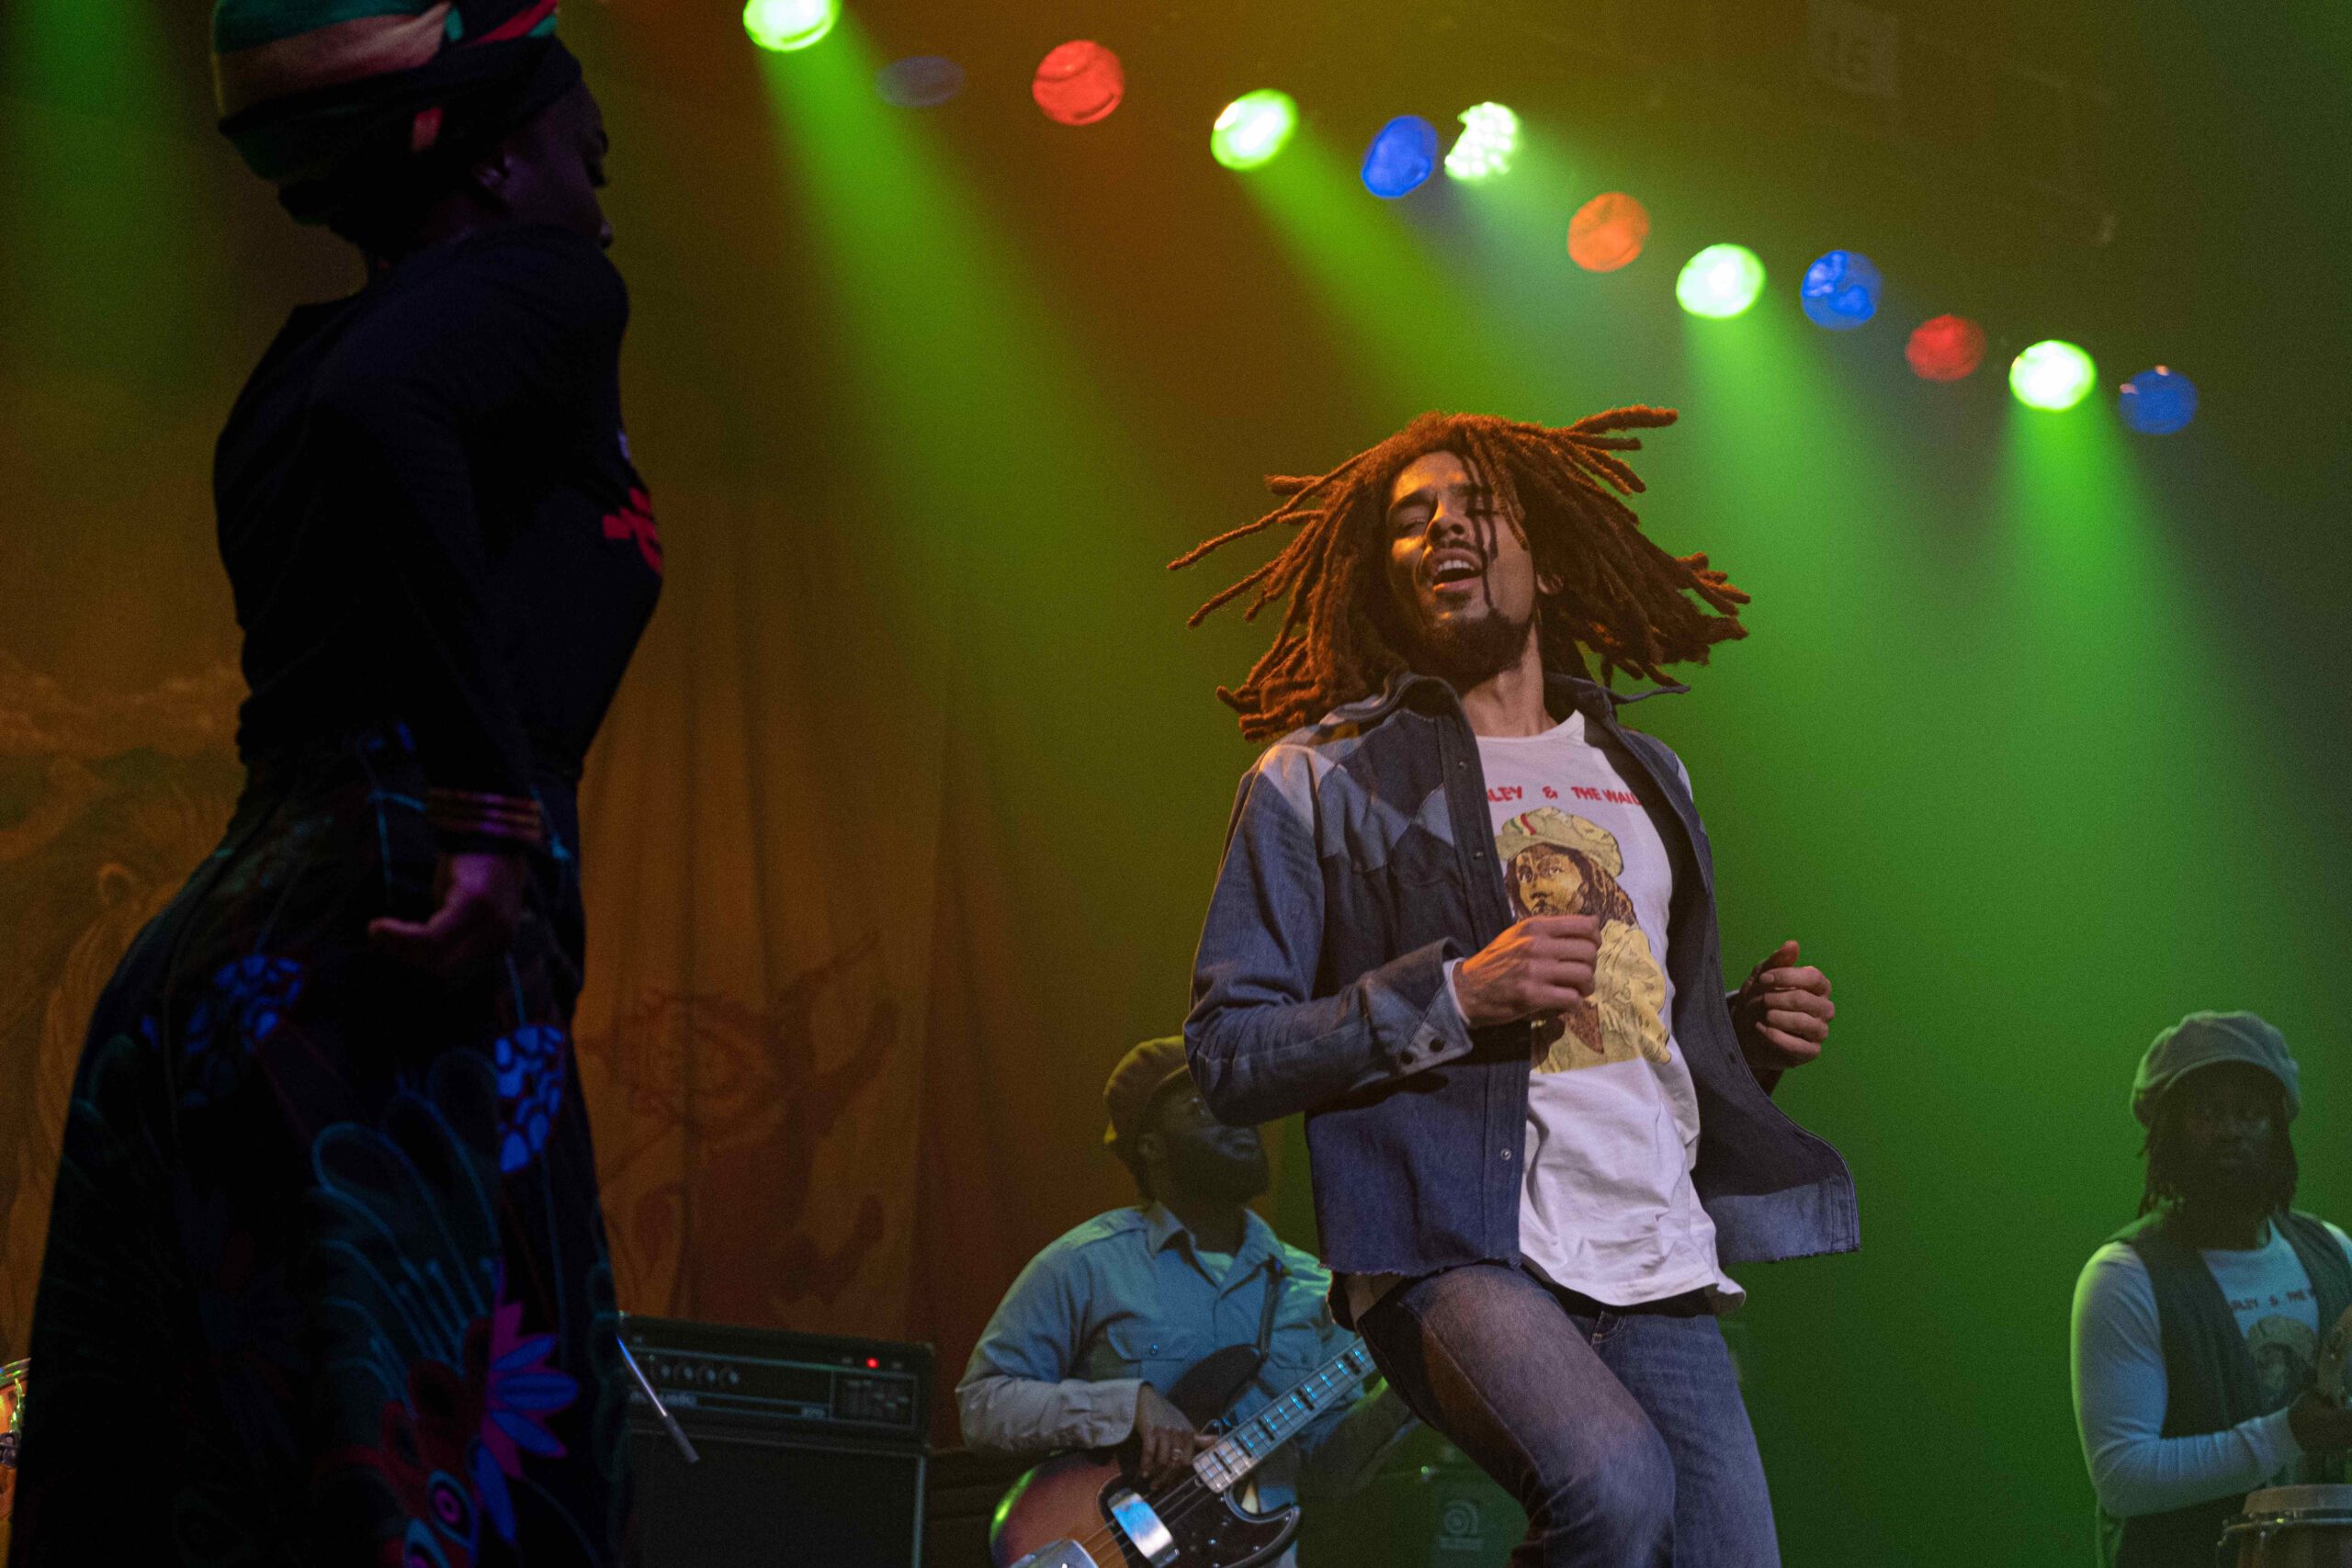 kingsley ben Adir in Bob Marley: One Love